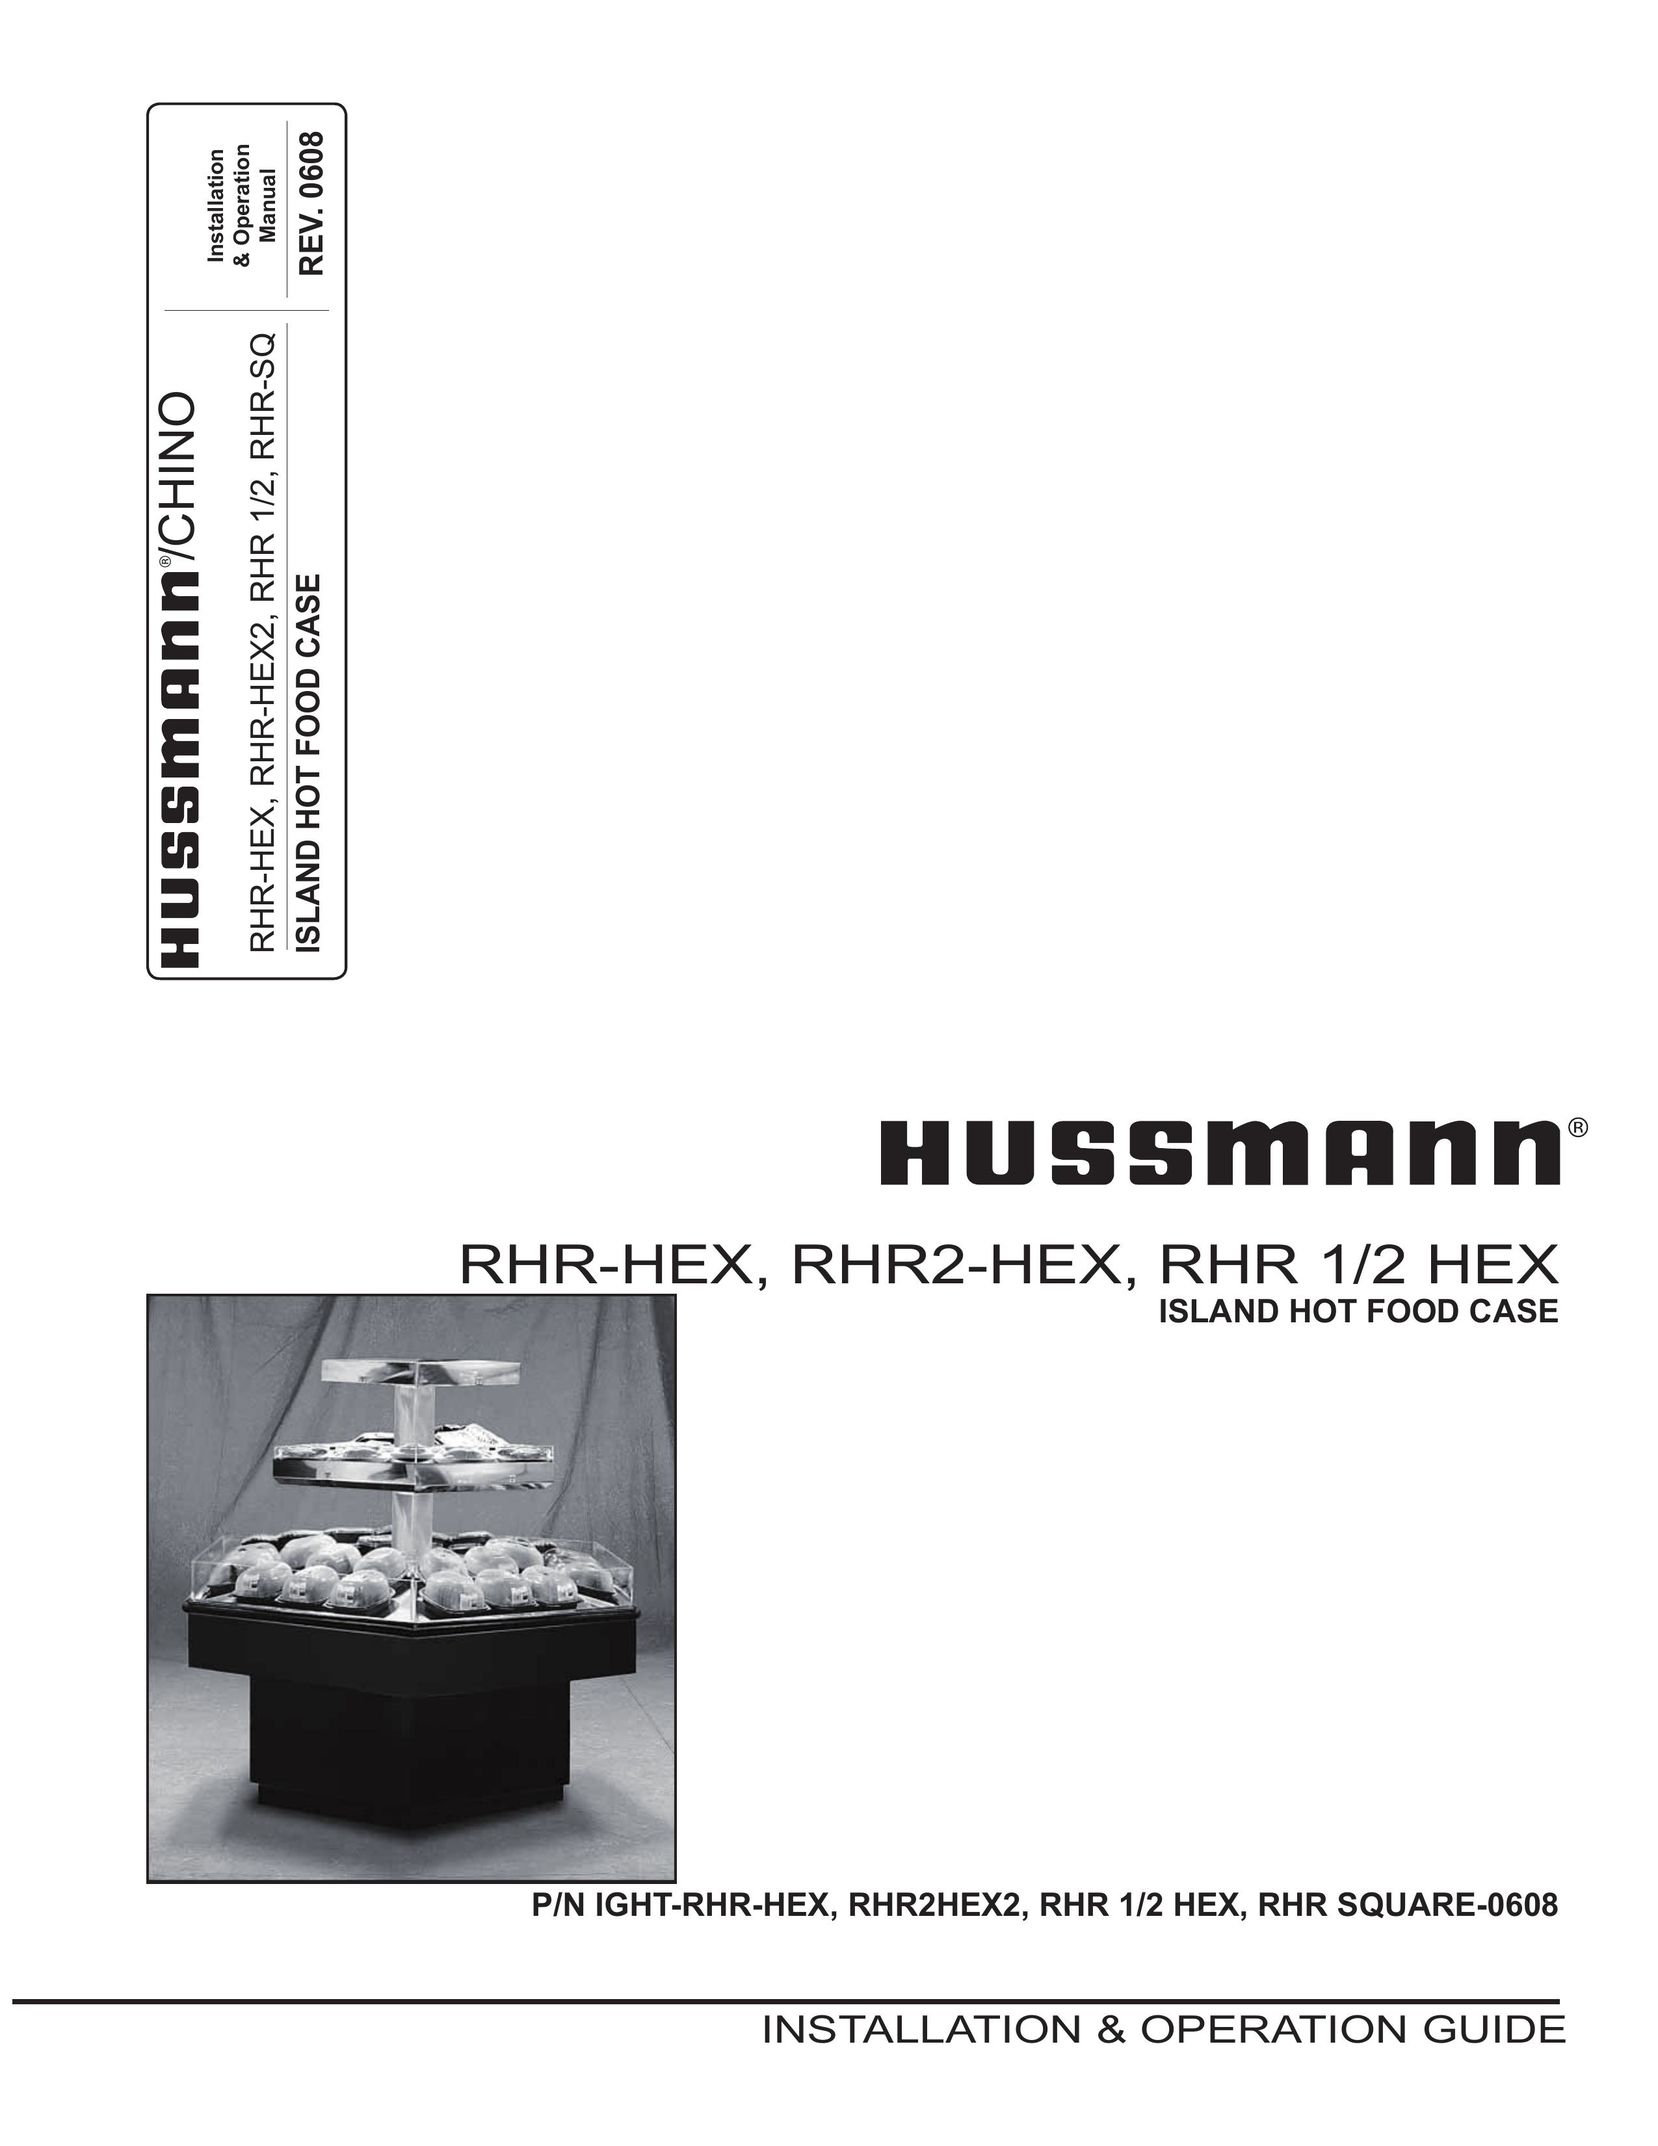 hussman RHR2-HEX Food Warmer User Manual